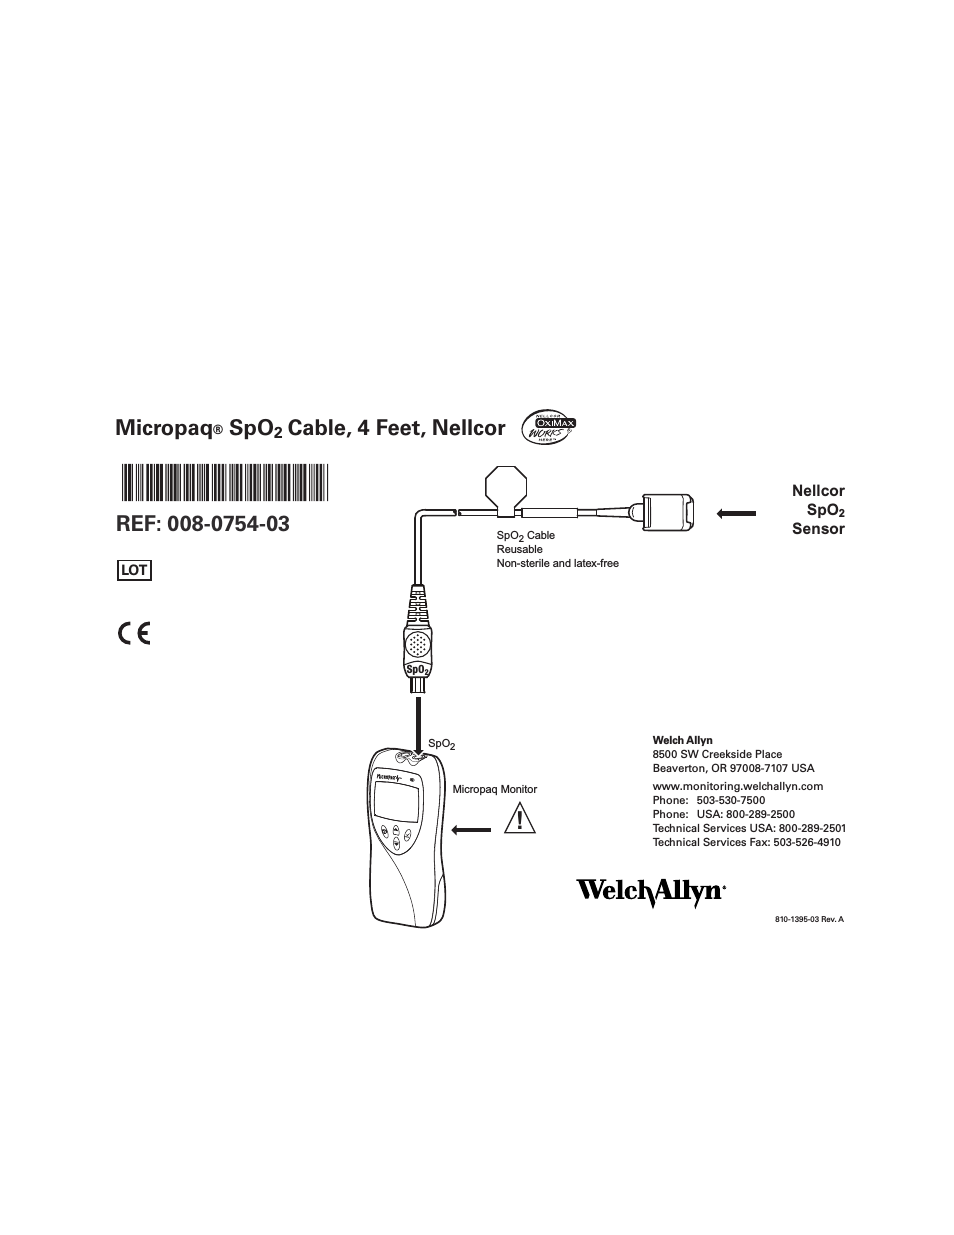 Micropaq Spo2 Cable, 4 Feet, Nellcor - Quick Reference Guide